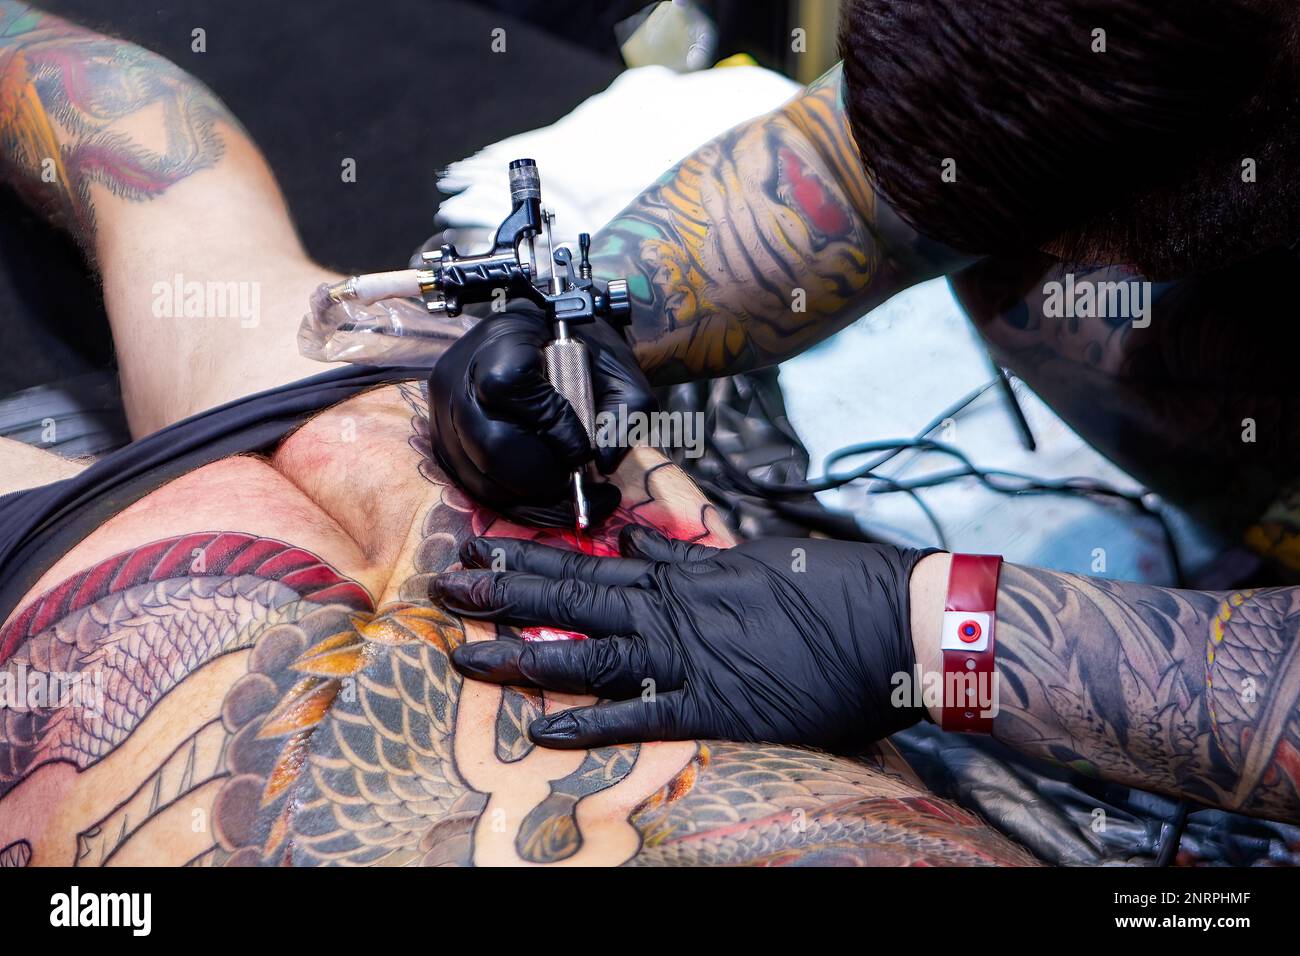 Irezumi Tattoos Sydney - Japanese Irezumi Sleeve Tattoos | Authentink